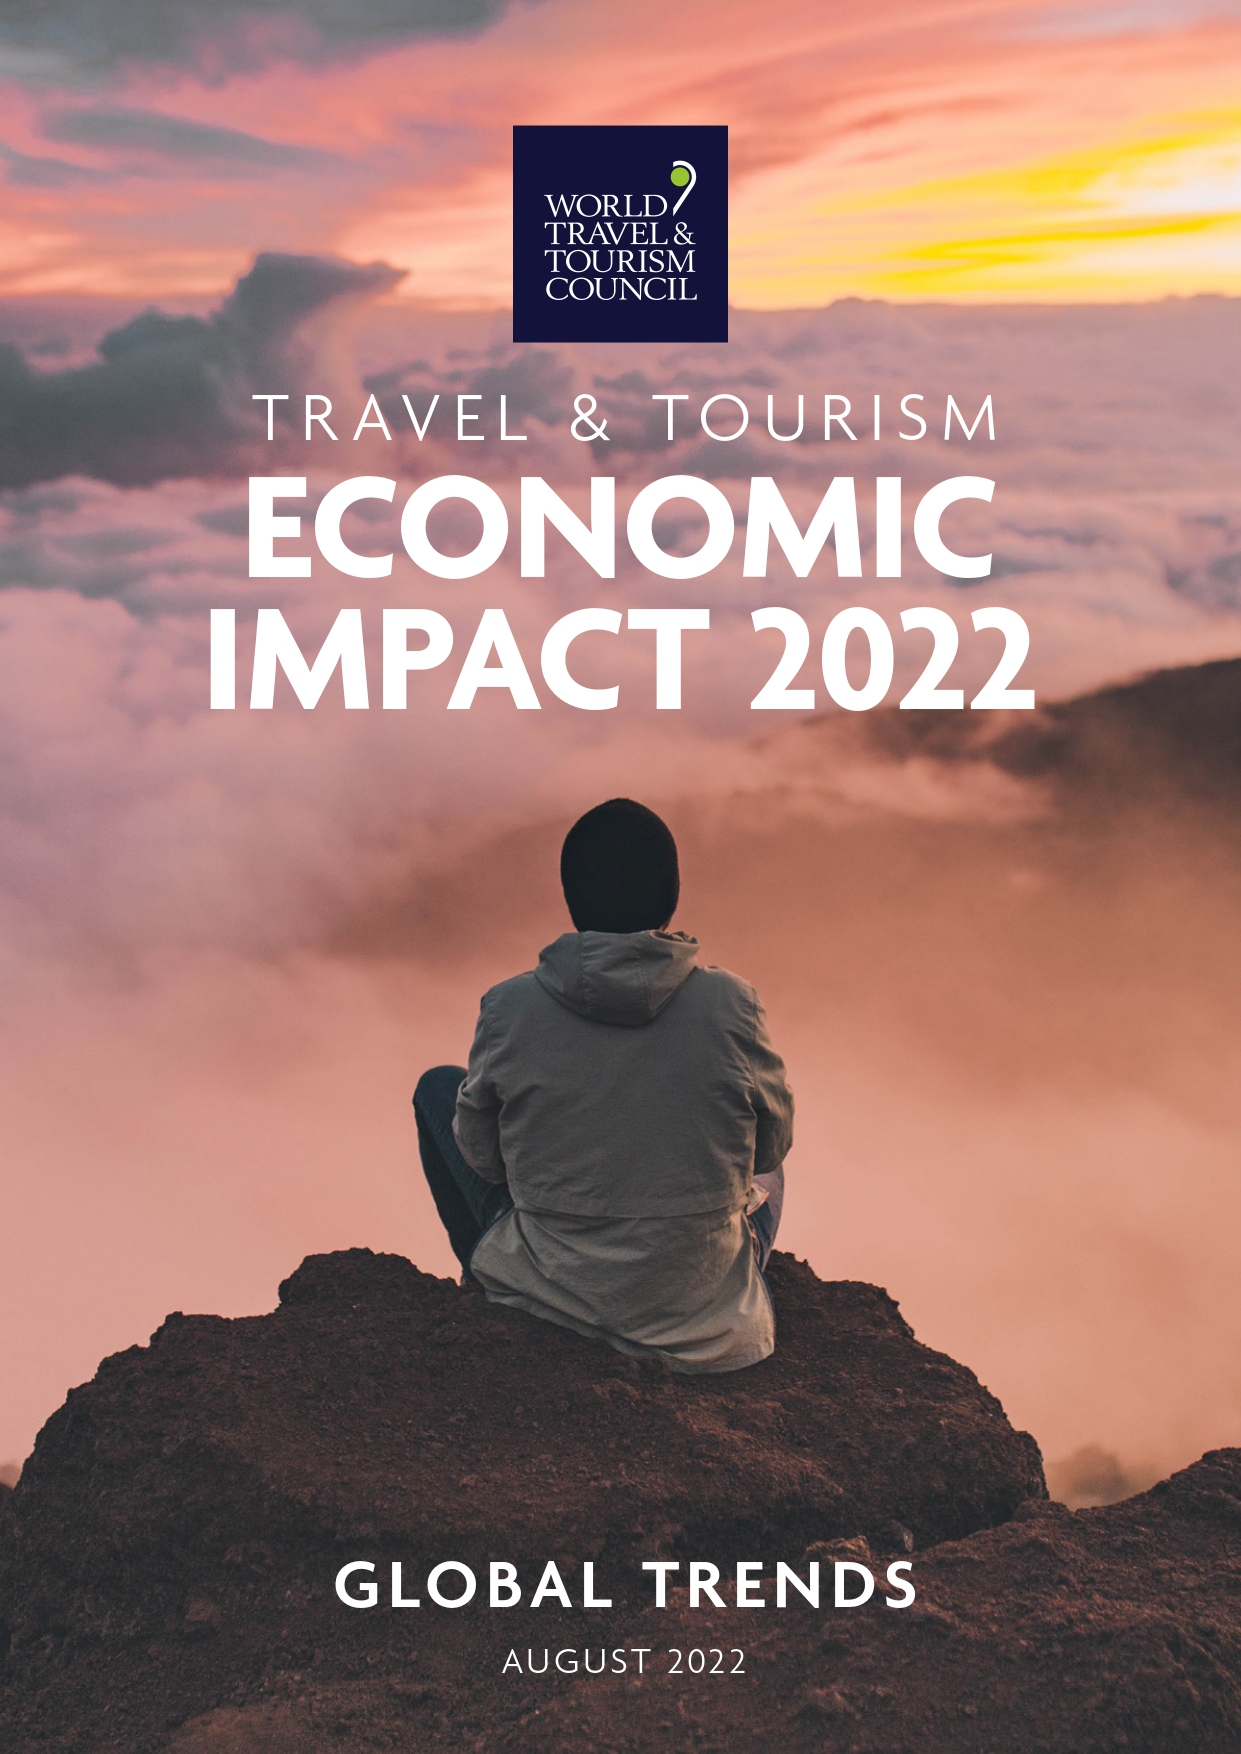 impact of tourism on economic development pdf